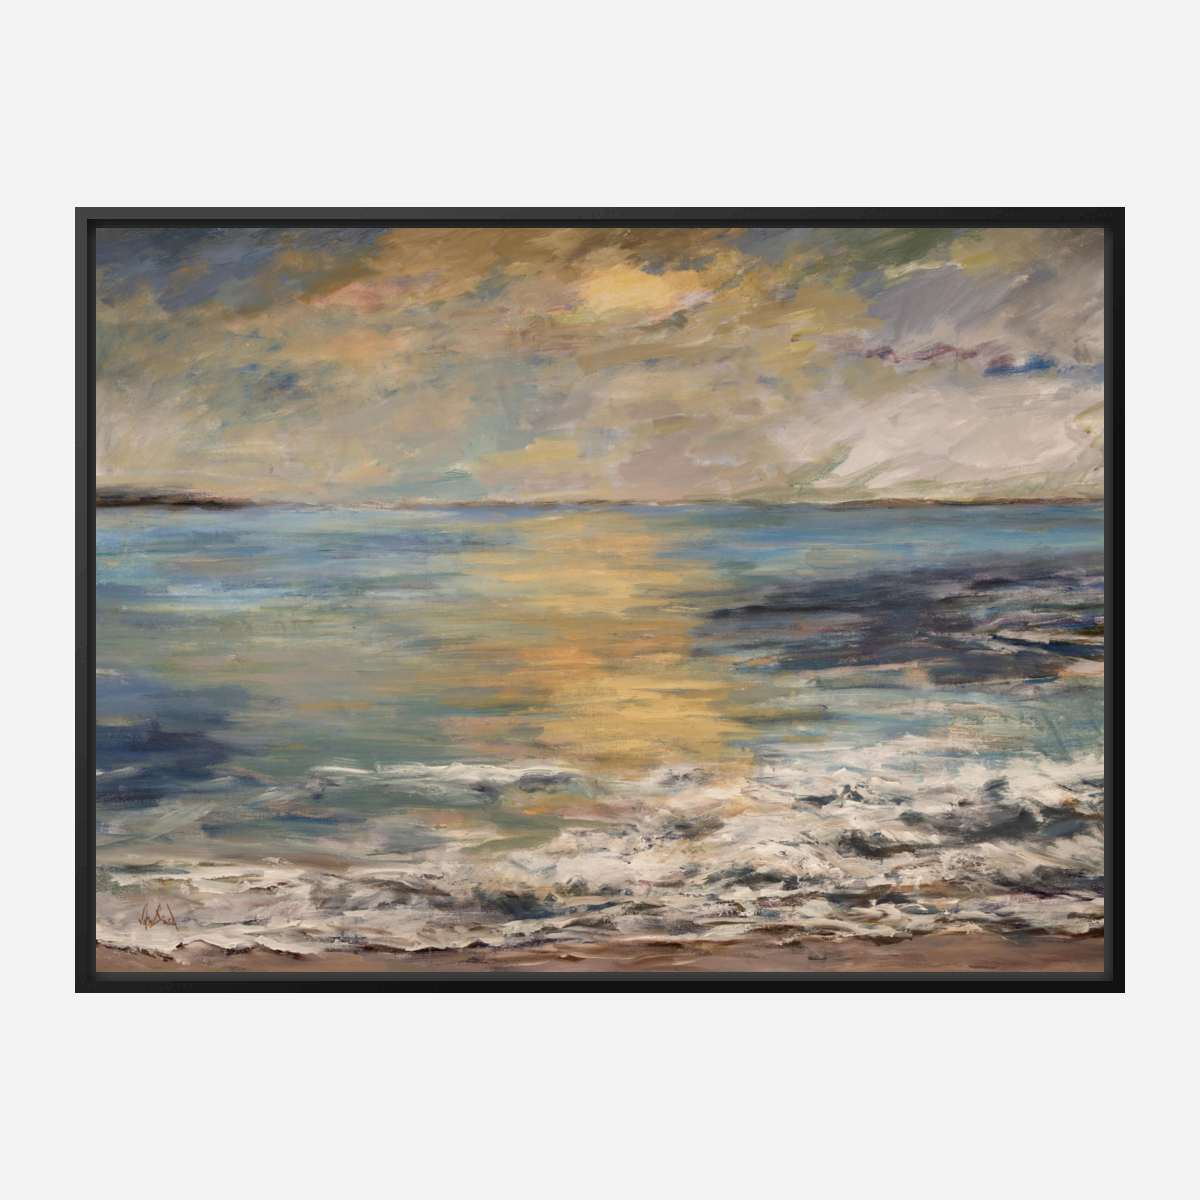 Dana Point at Sunset Artist Enhanced Canvas Print